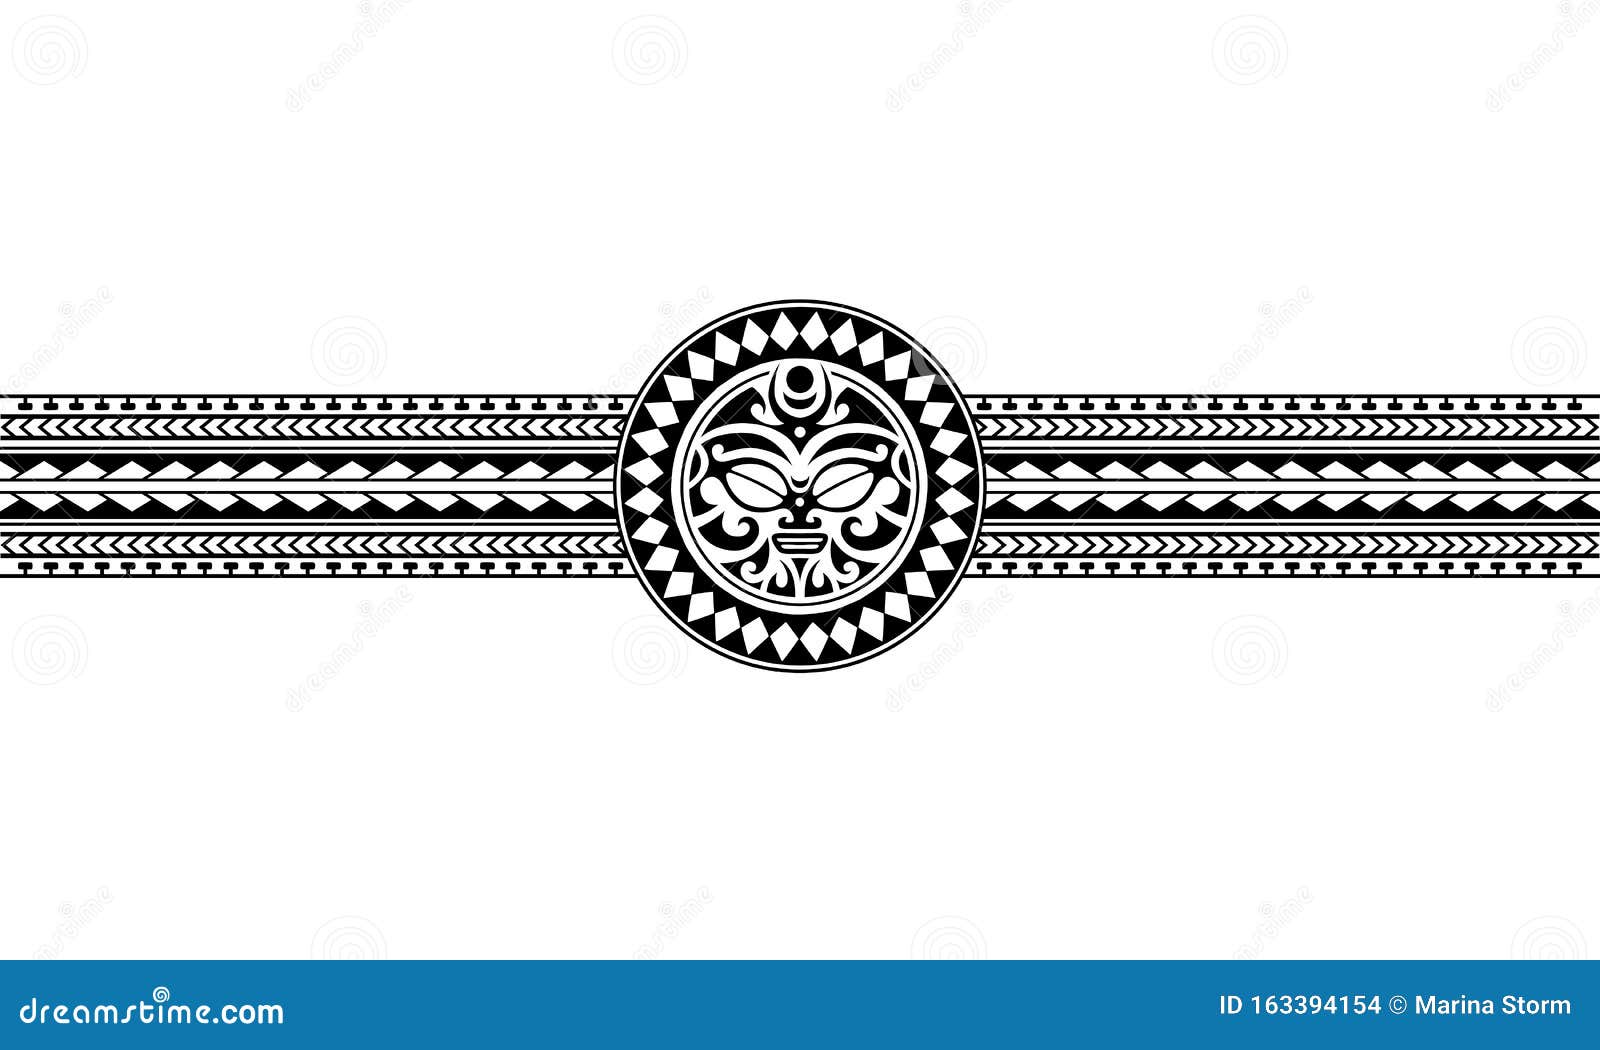 Polynesian Armband Tattoo Stencil Set. Pattern Samoan. Black and White  Texture Stock Vector - Illustration of maori, element: 256293563, Tattoo  Stencils - valleyresorts.co.uk